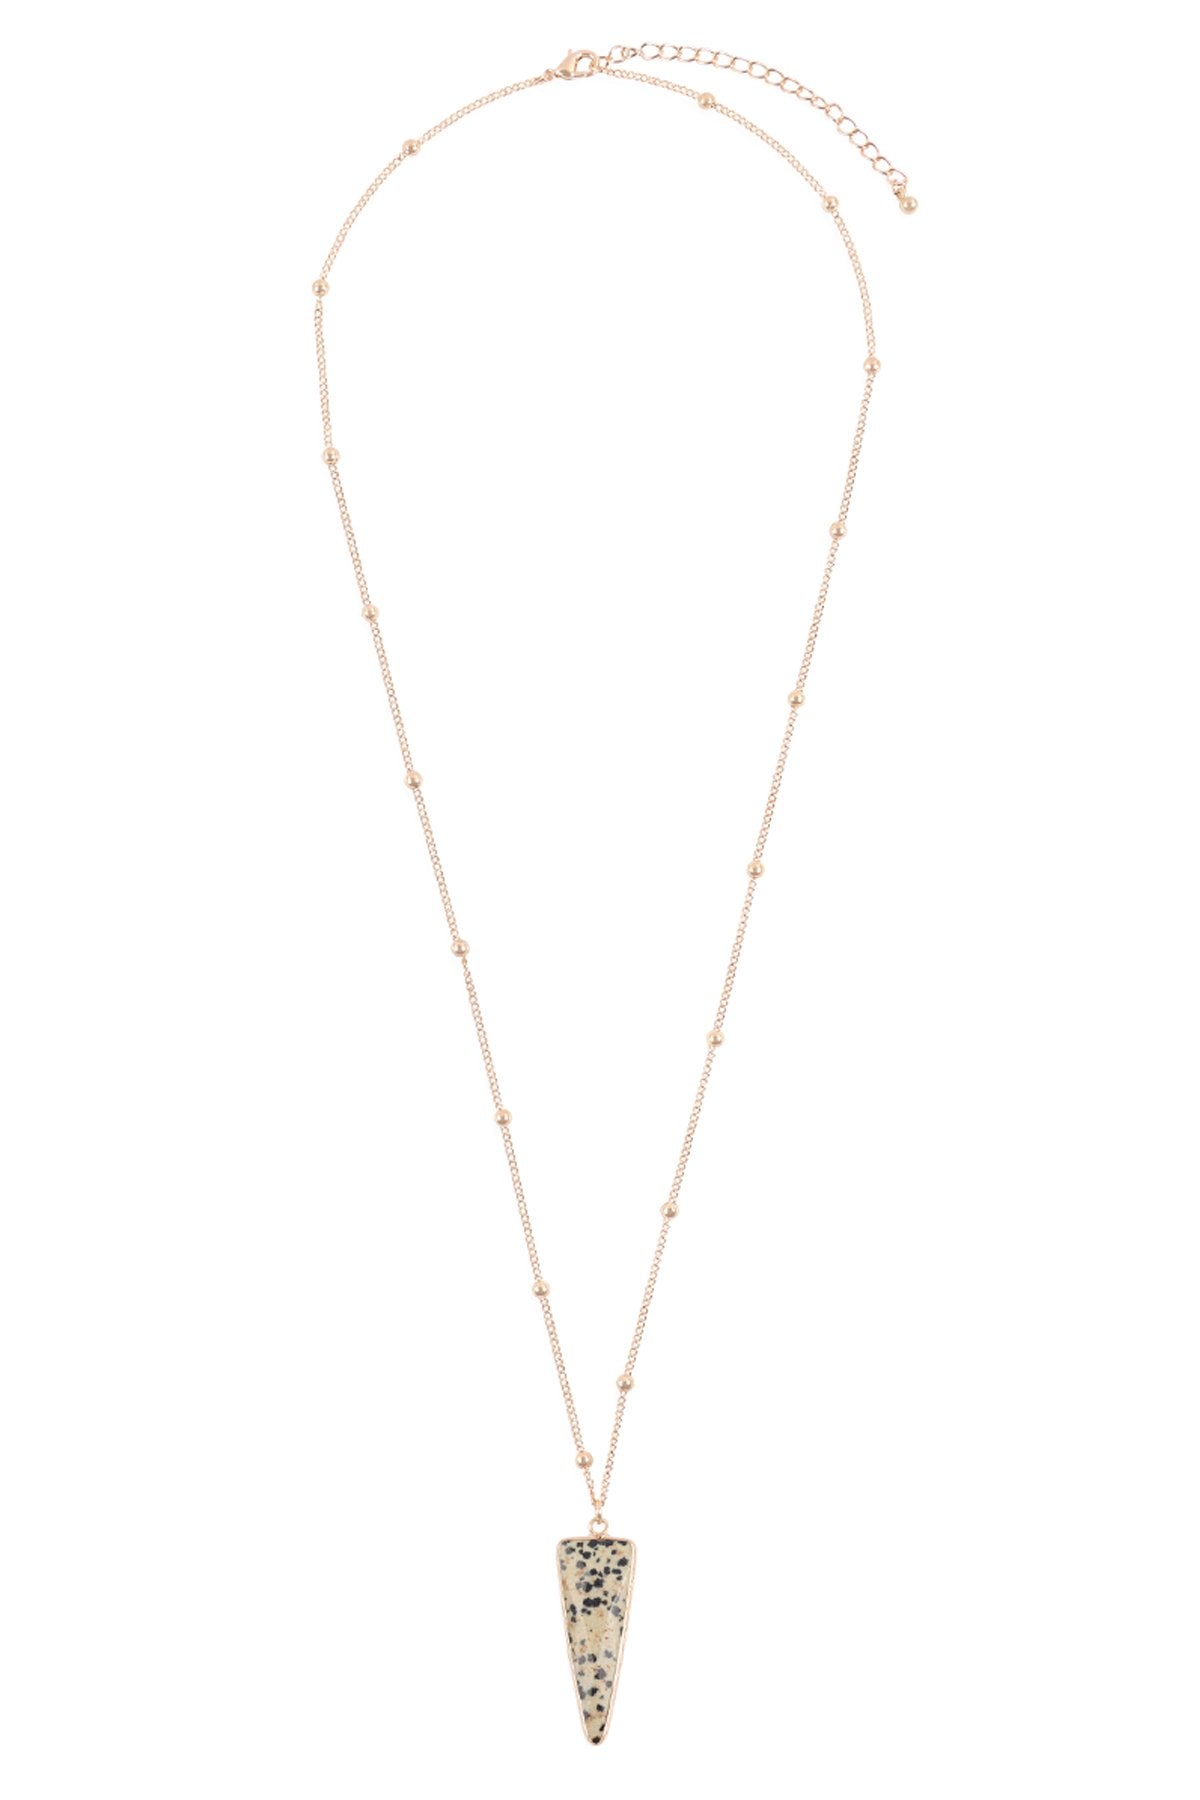 Hdn3119 - Arrowhead Shape Stone Pendant Necklace - LOLA LUXE